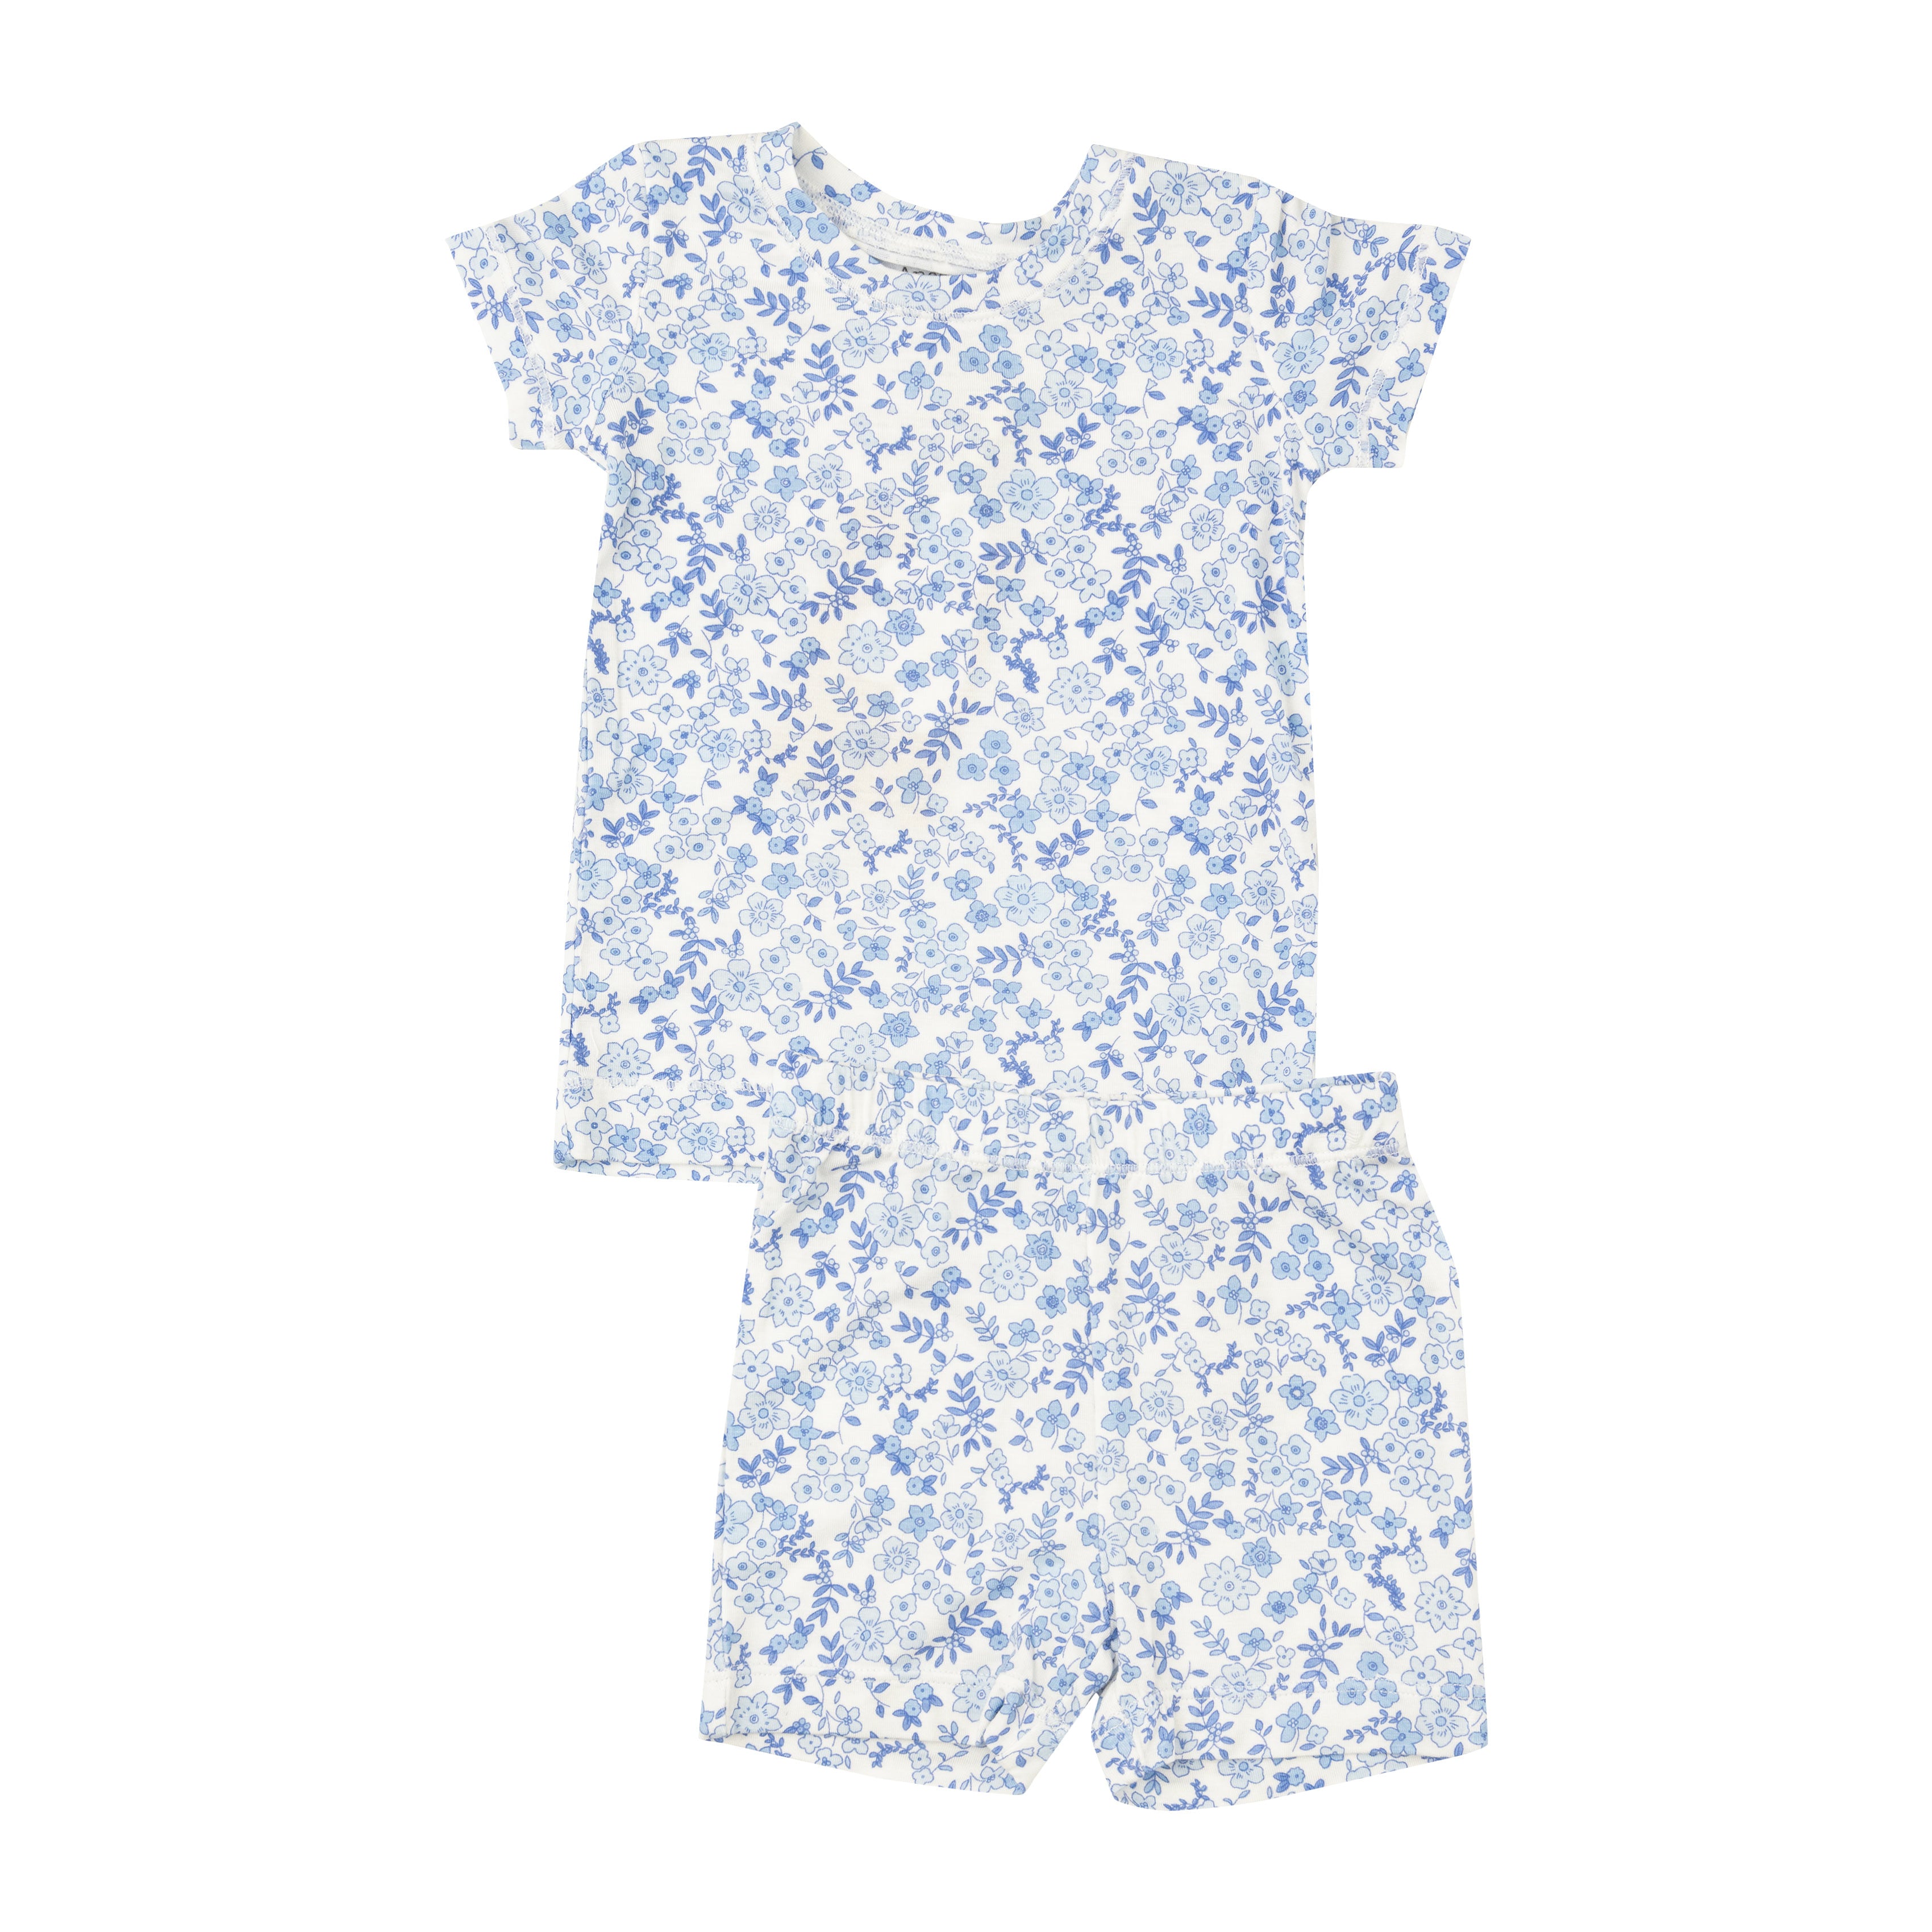 Loungewear Short Set - Blue Calico Floral